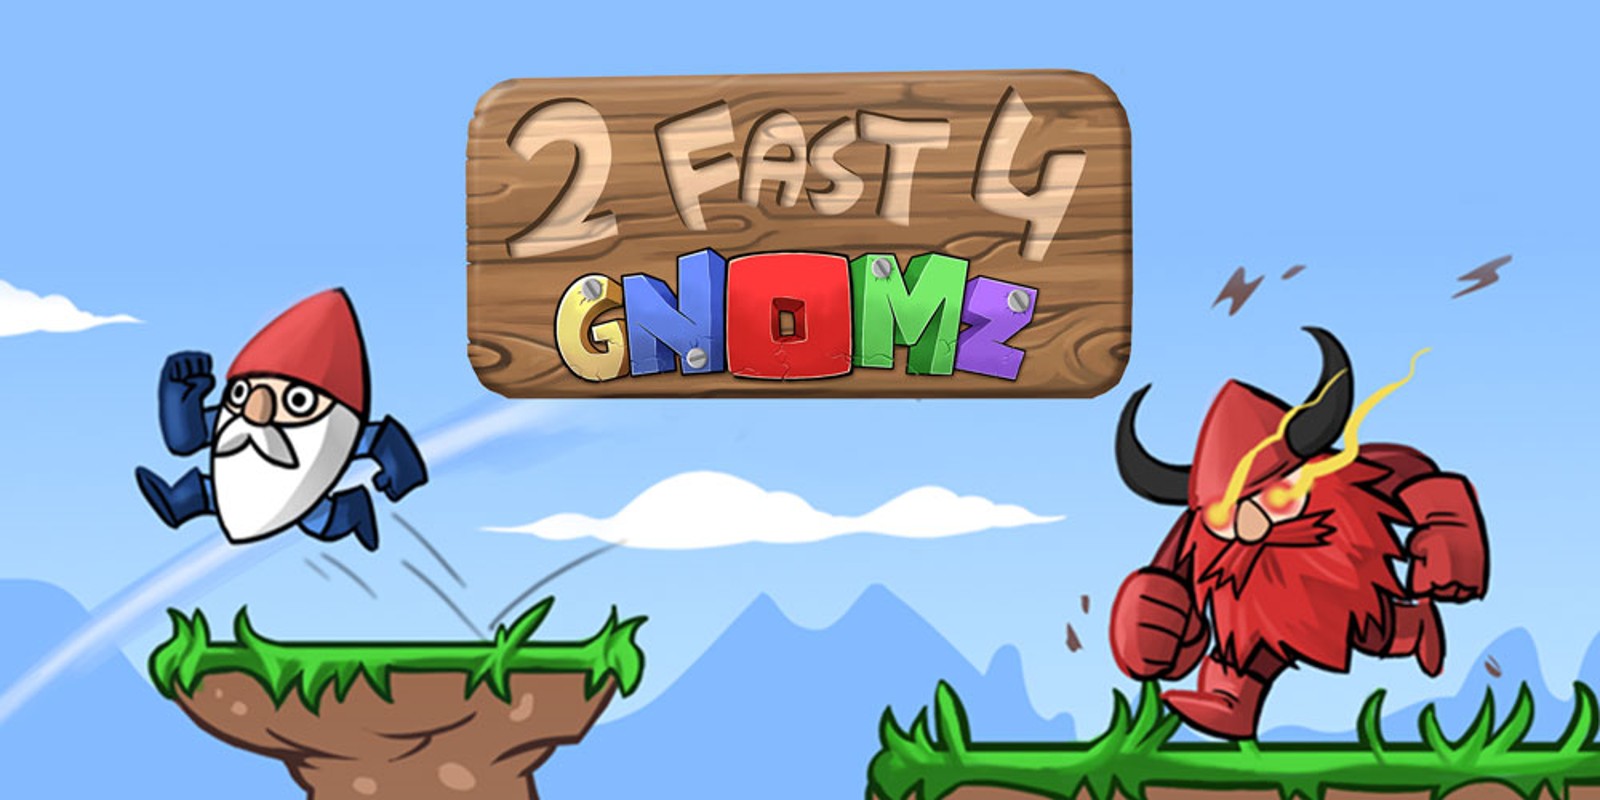 2-fast-4-gnomz-wiiware-games-nintendo